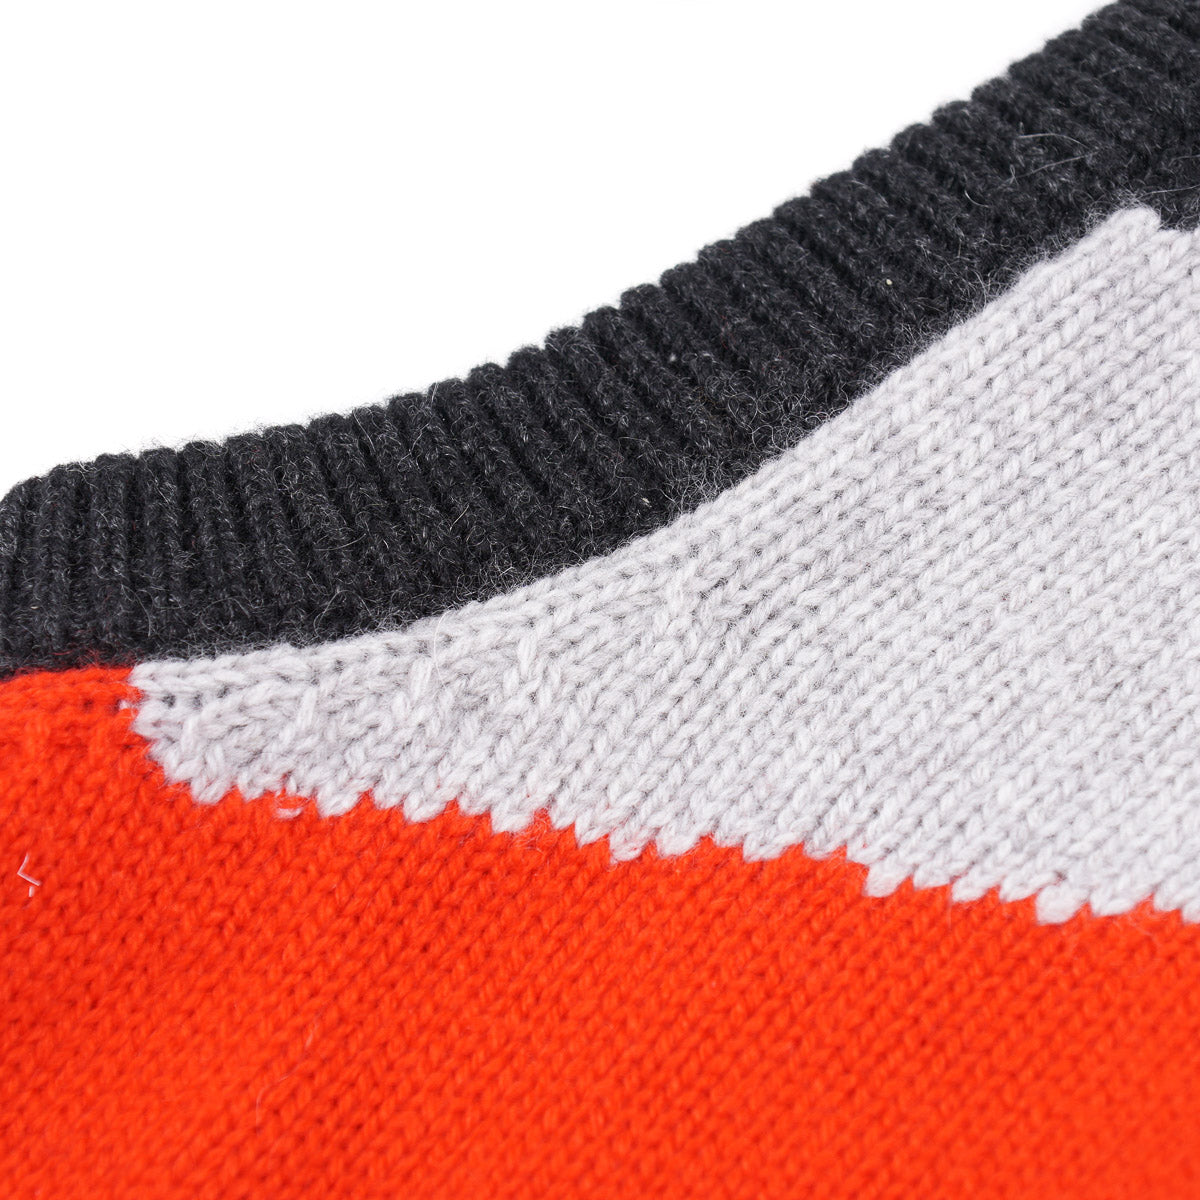 Kiton Cashmere Cardigan Sweater Vest - Top Shelf Apparel